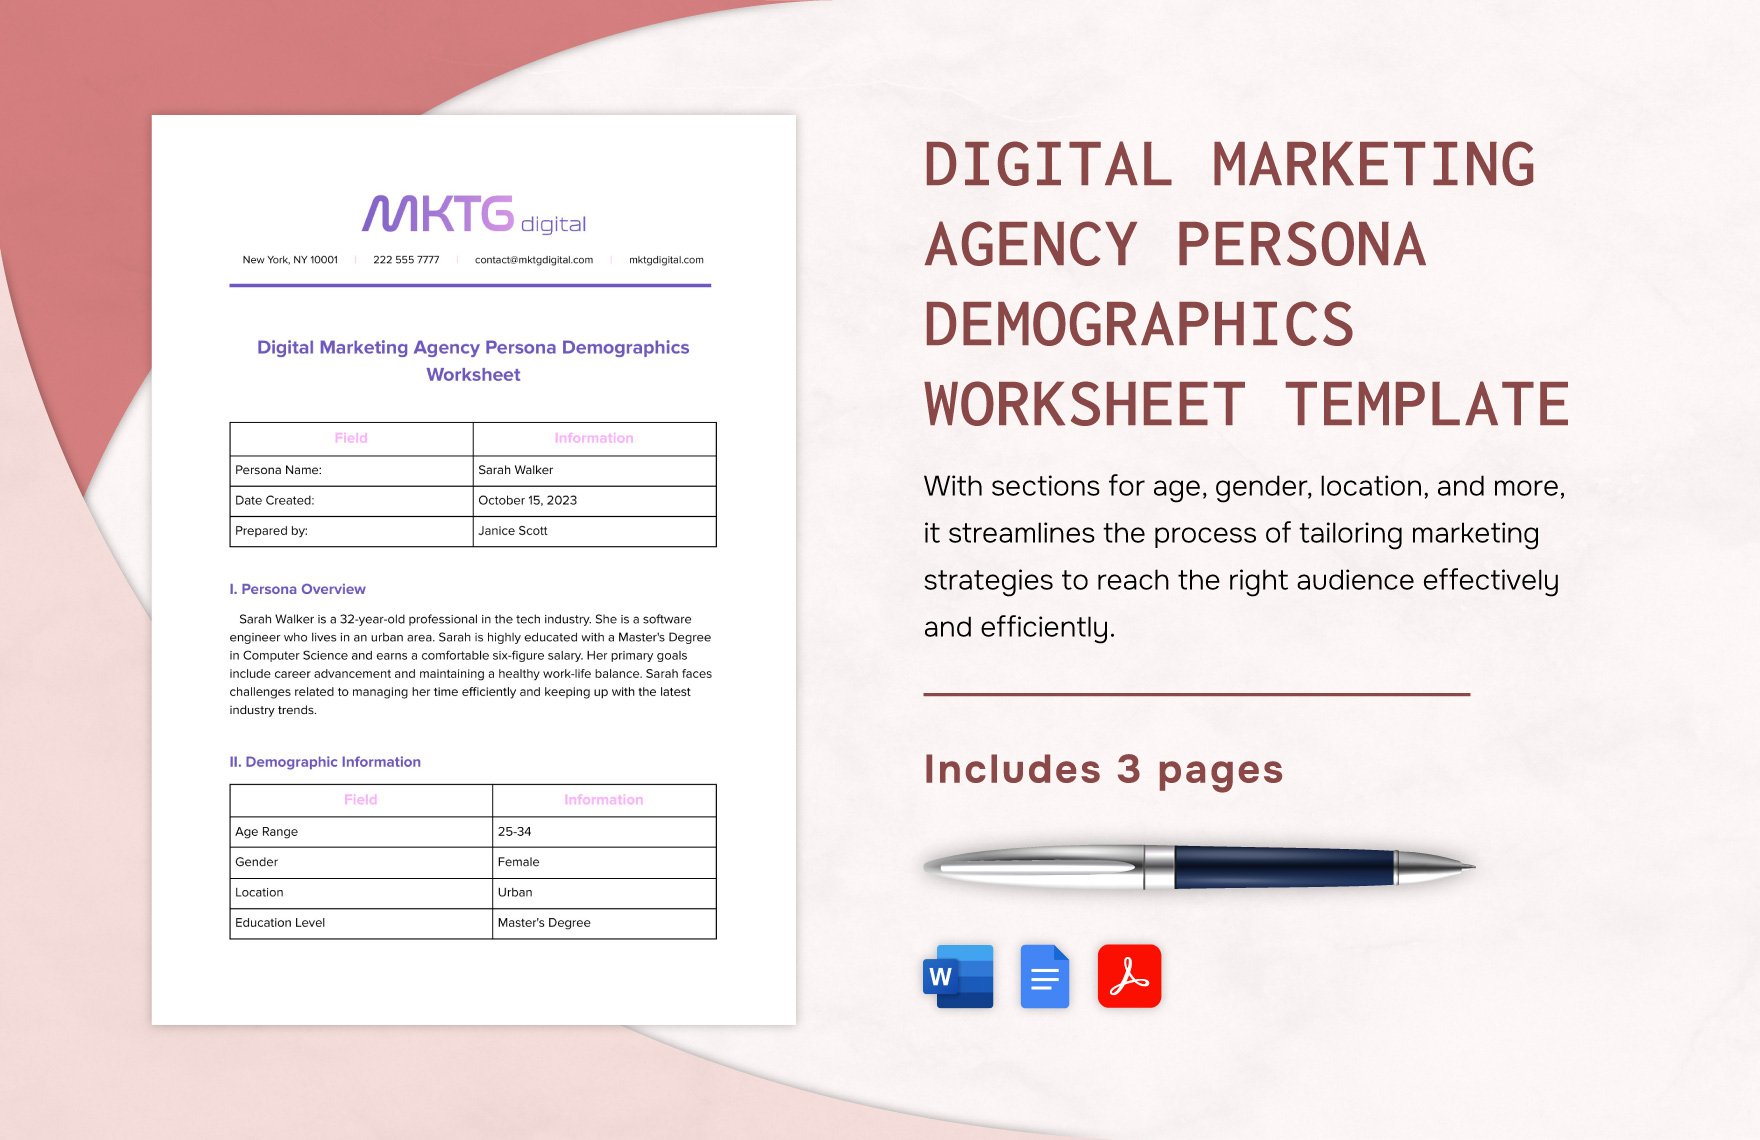 Digital Marketing Agency Persona Demographics Worksheet Template